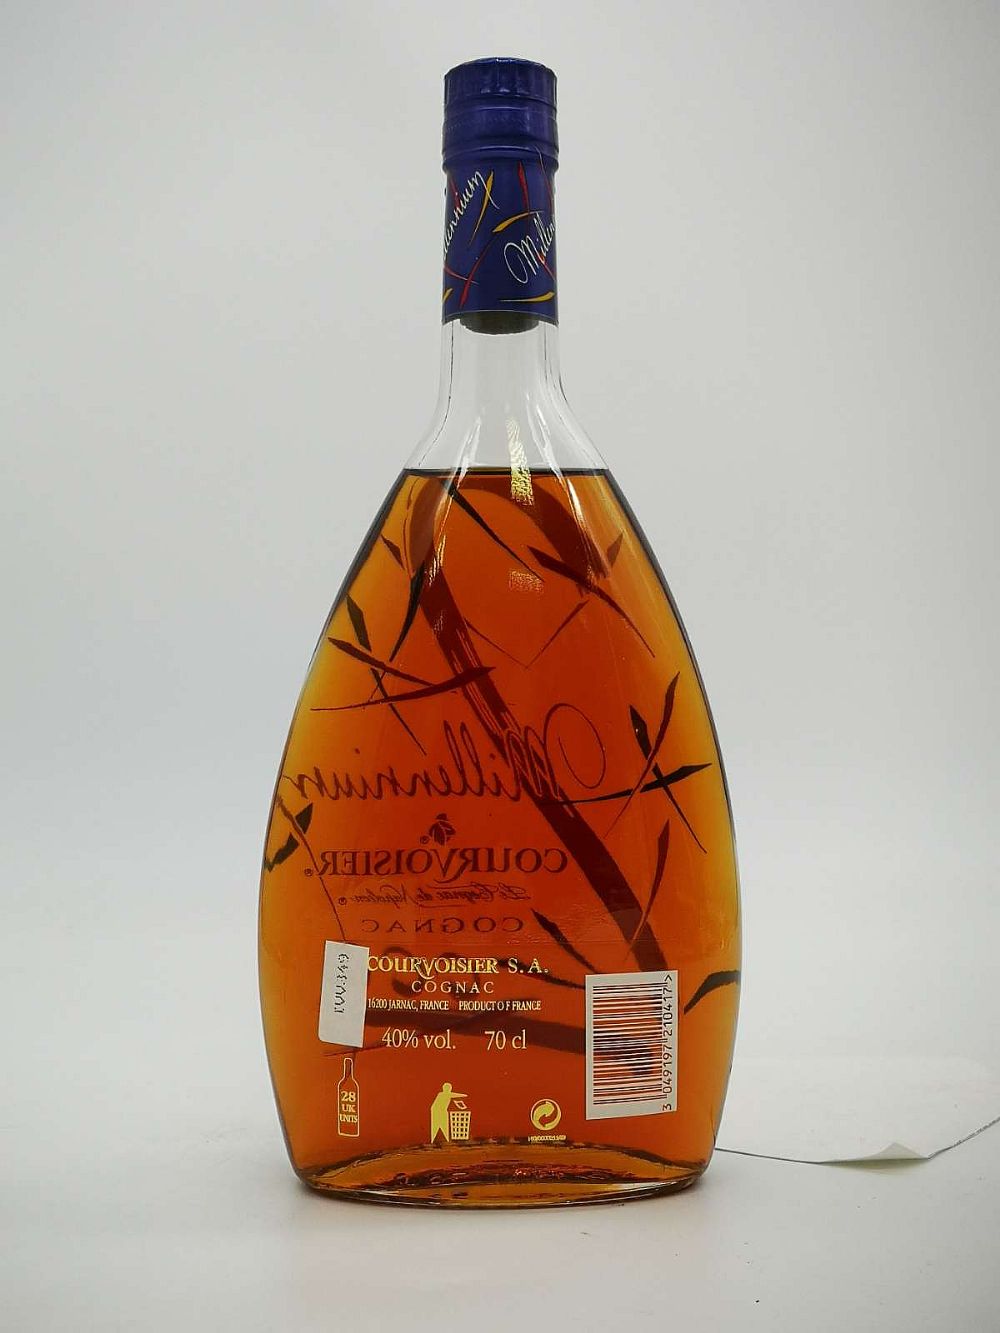 Courvoisier 2000 Millenium Cognac